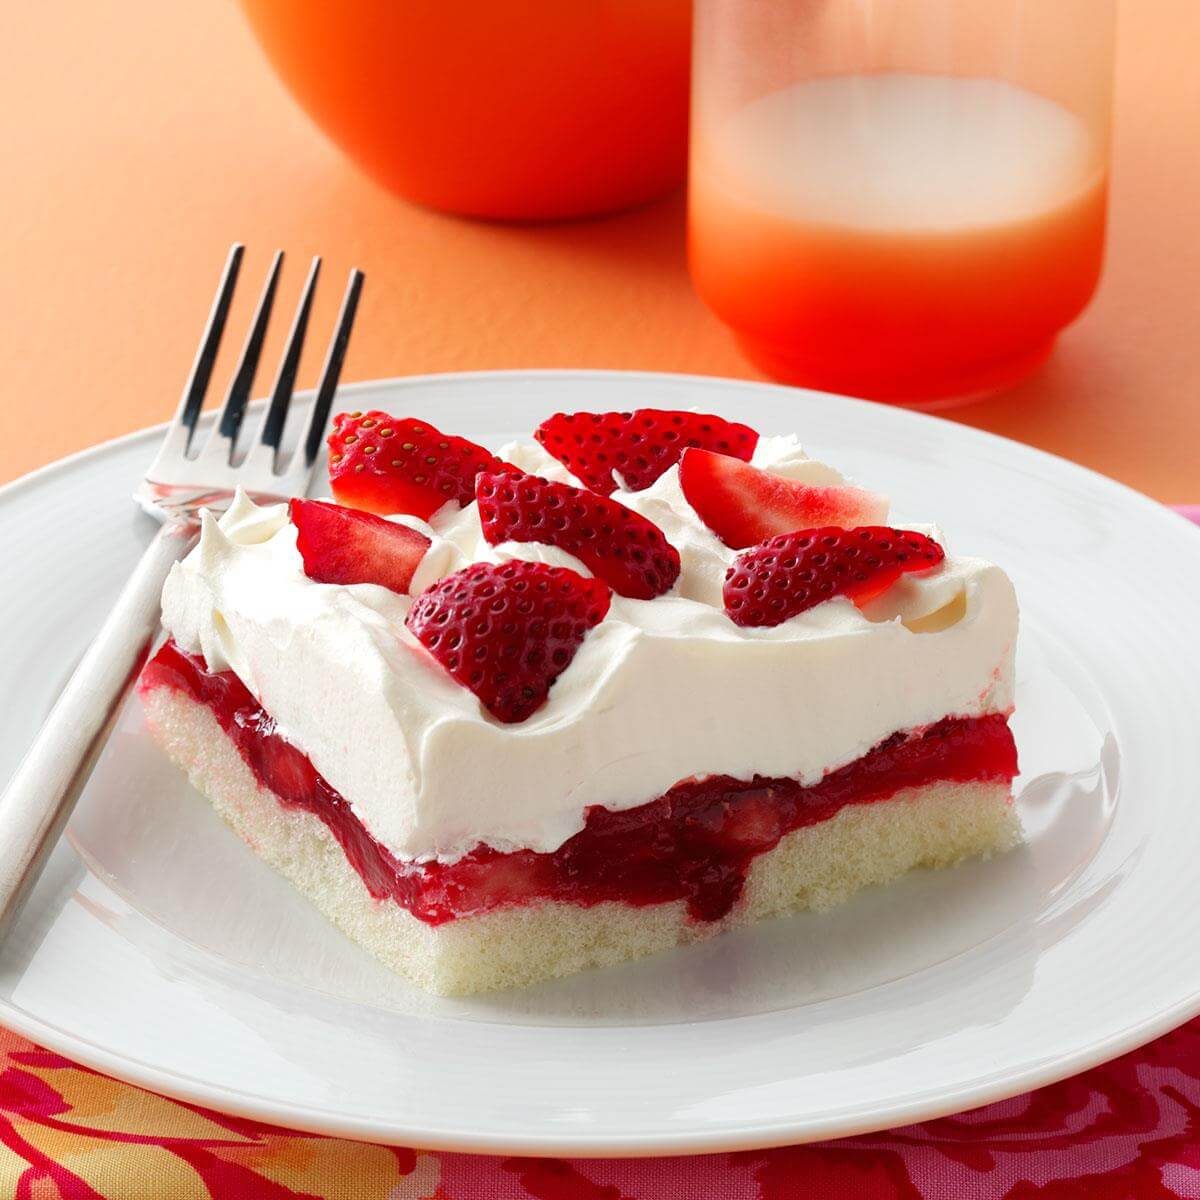 Strawberry Ladyfinger Dessert Recipe | Taste of Home